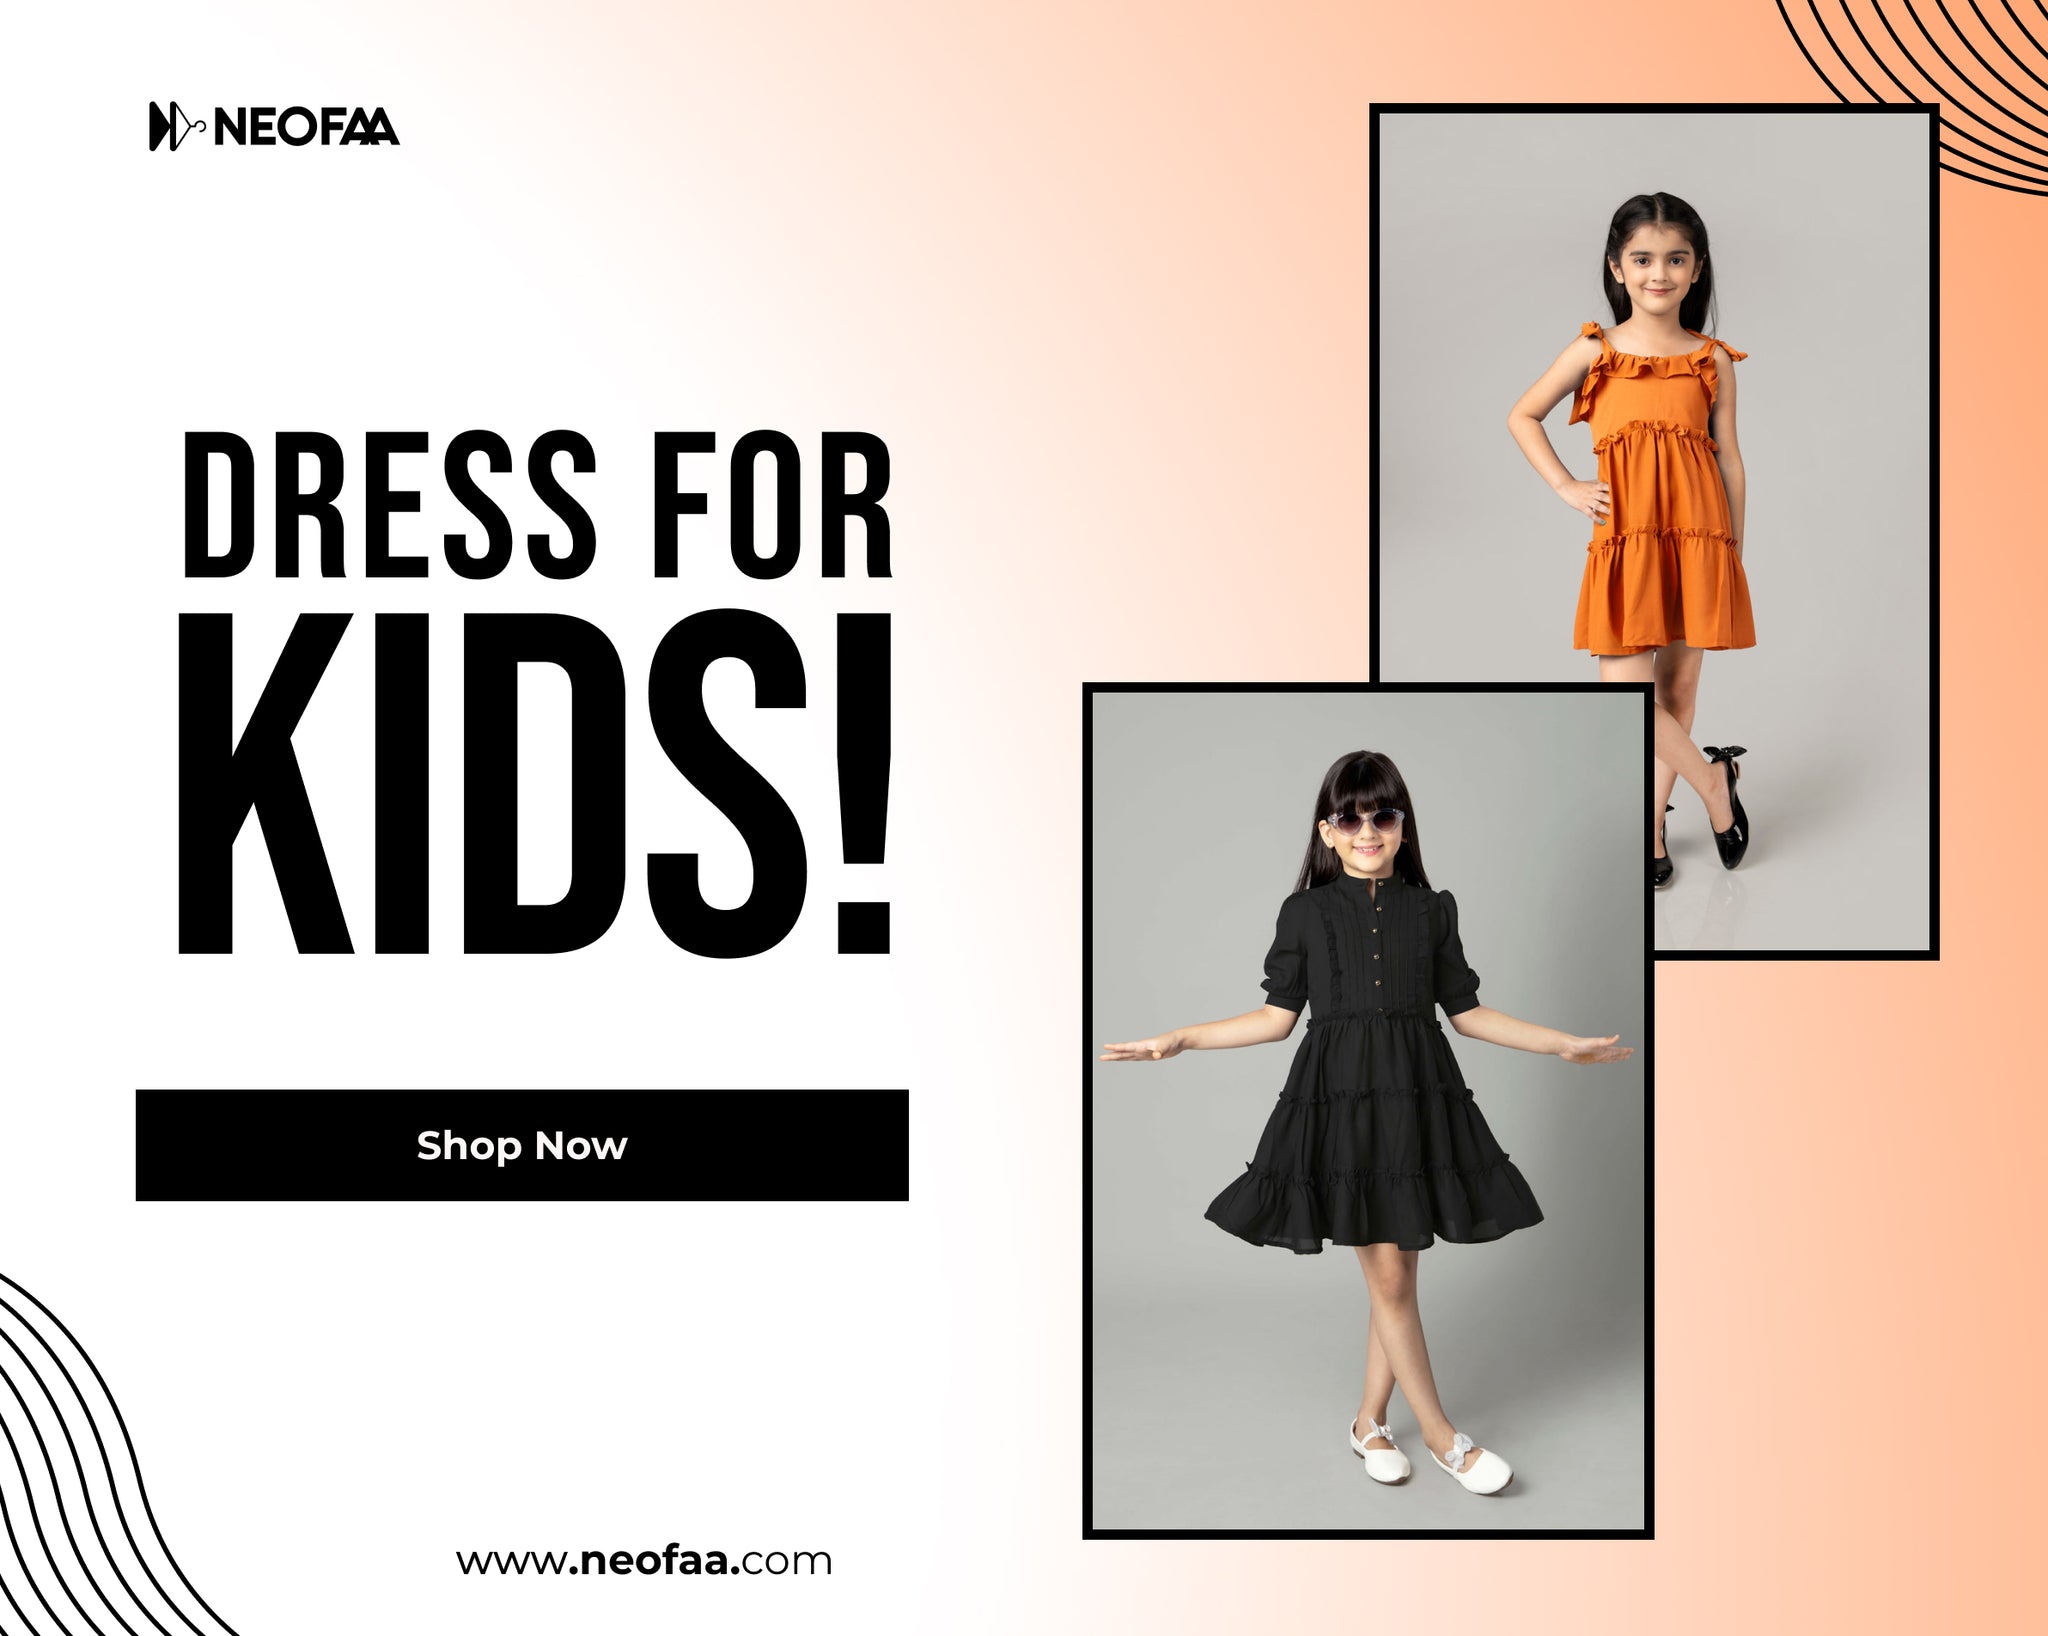 Dress for Kids!